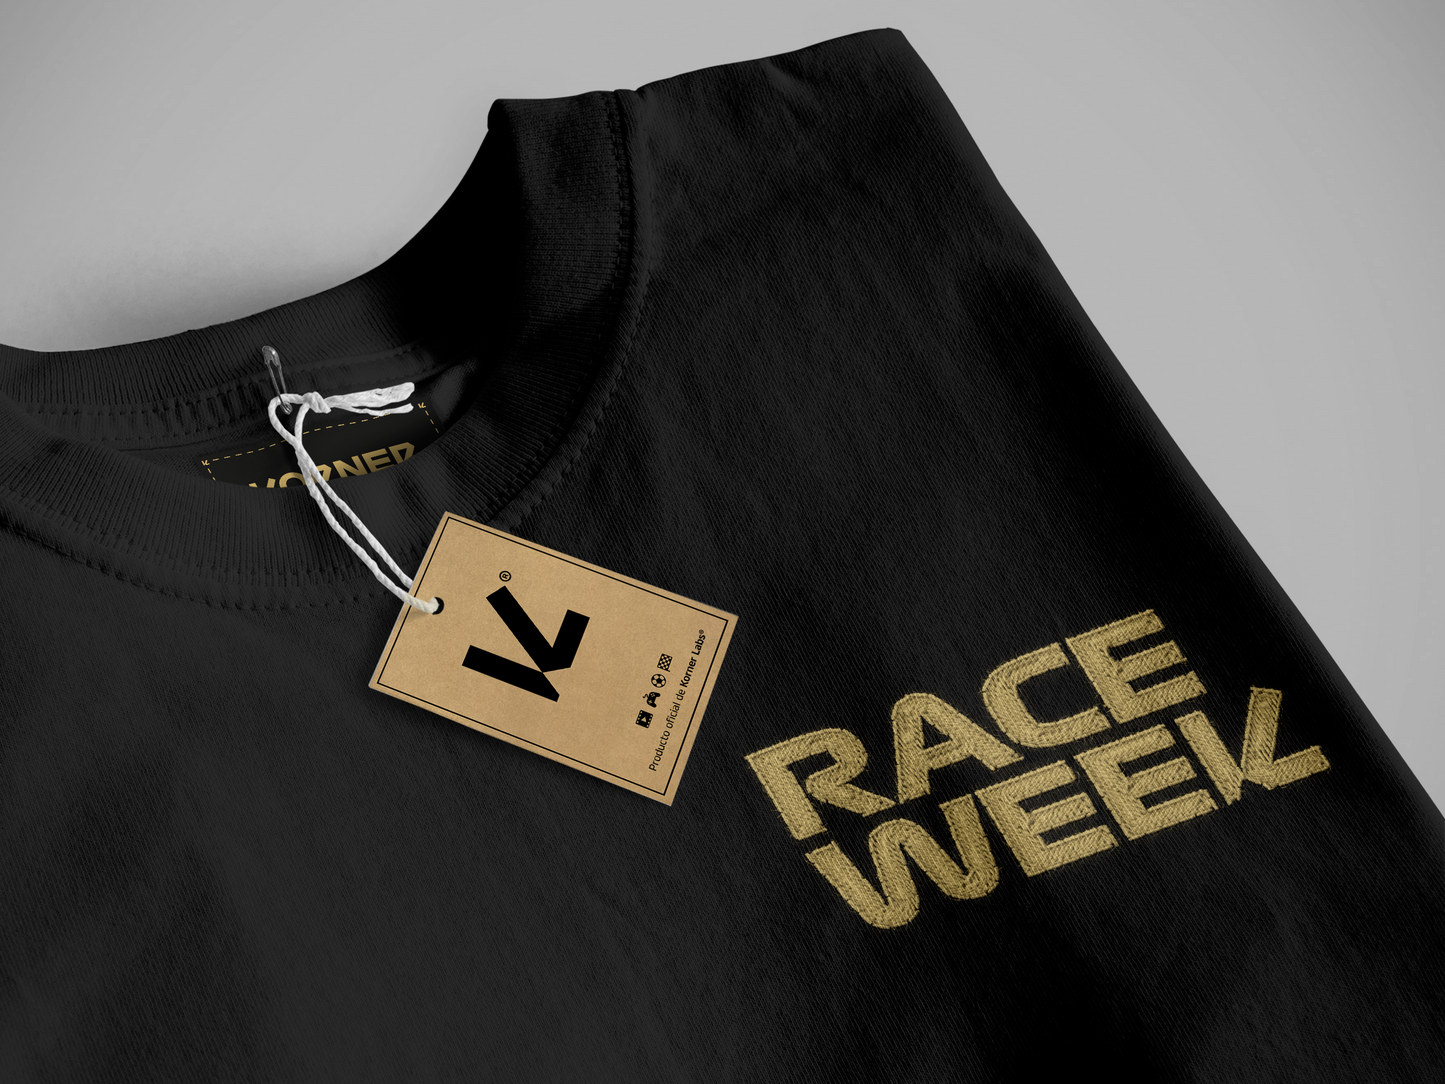 Camiseta Bordada 'Race Week' - Motorsport